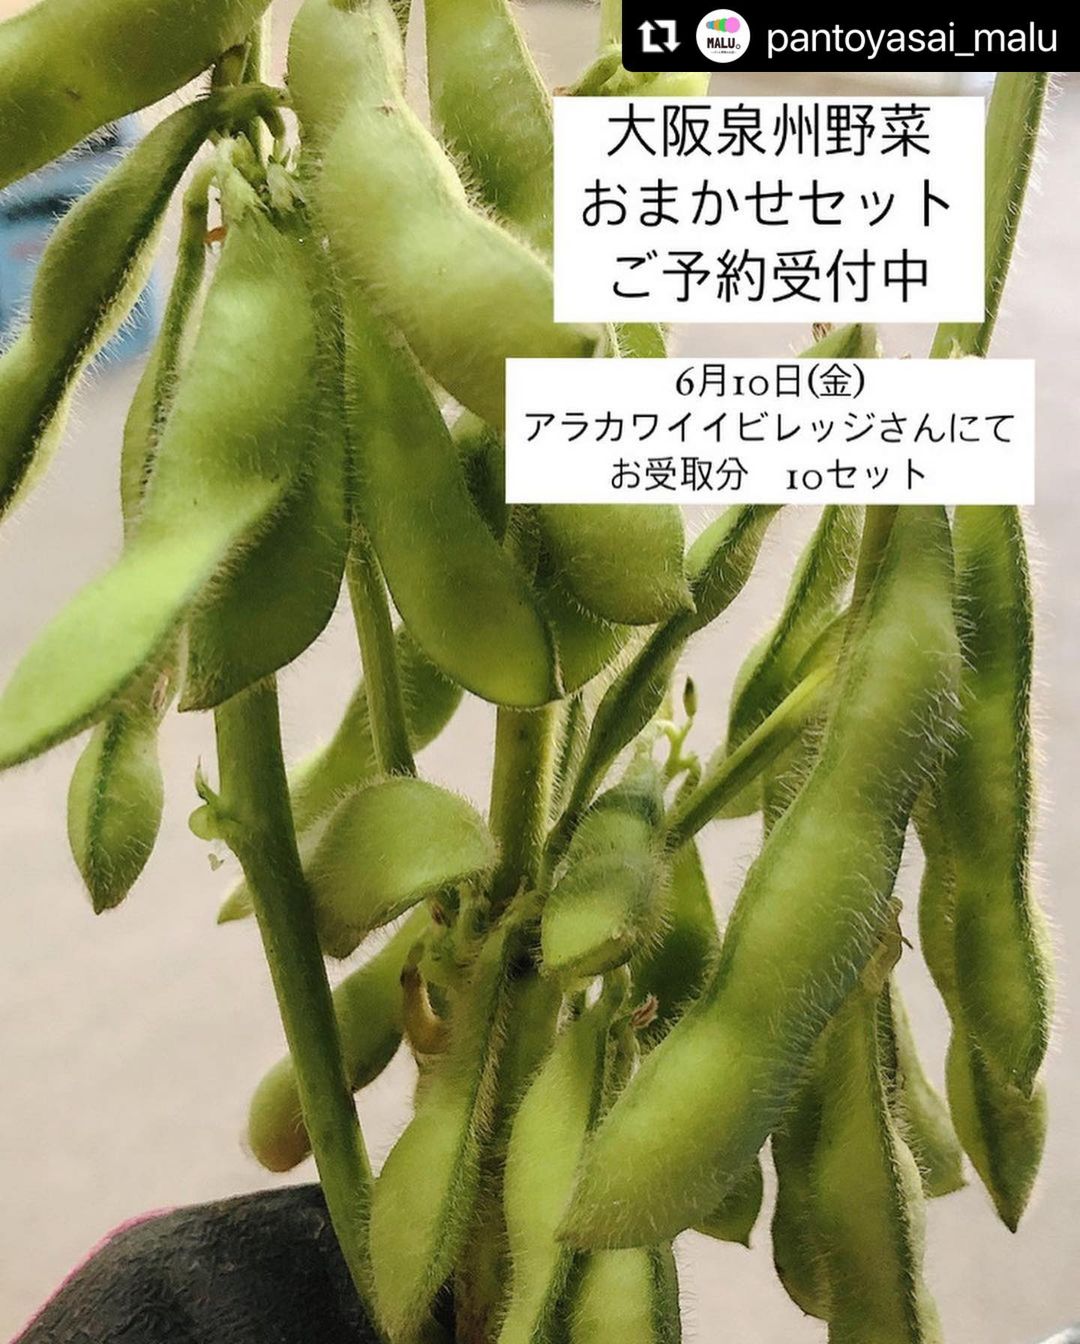 ARAKAWA ii VILLAGE ／ お野菜セット 6/10到着分 絶賛予約受付中です！ ＼